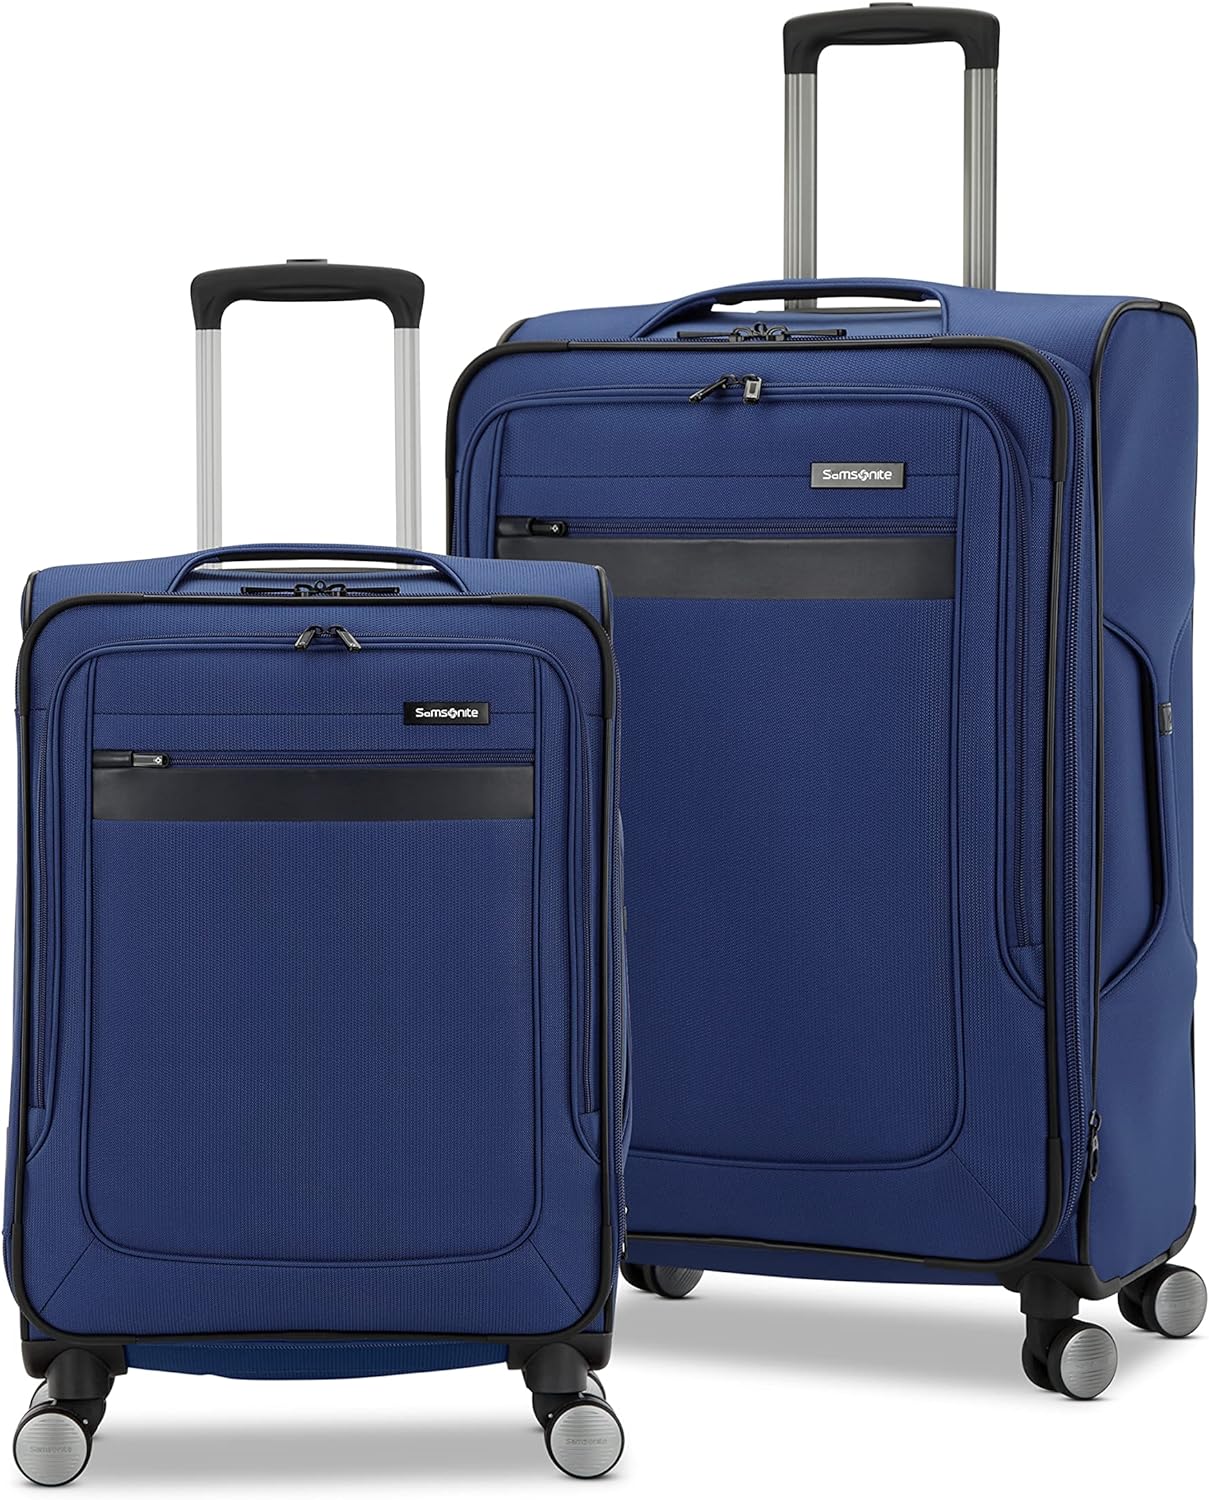 Samsonite Ascella 3.0 Luggage Review